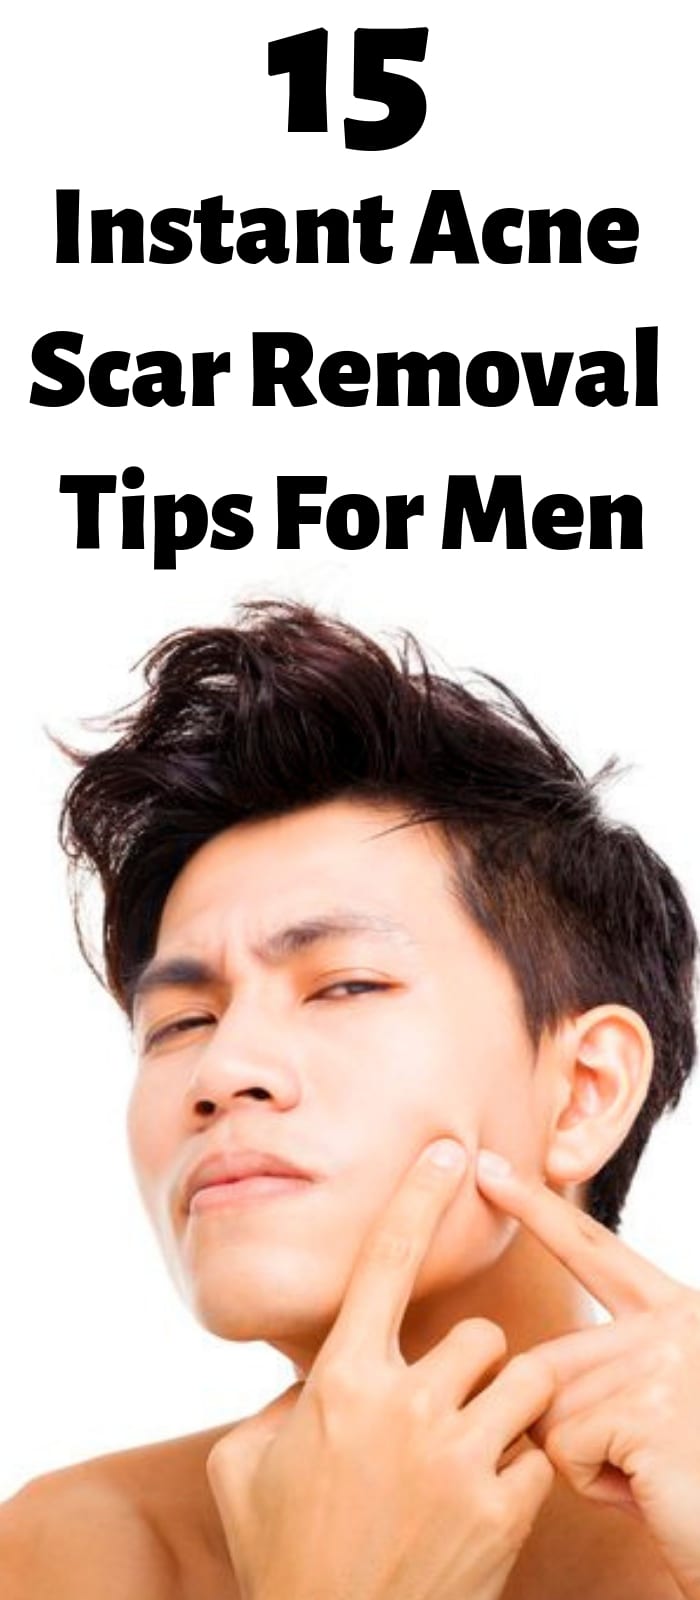 15 Instant Acne Scar Removal Tips For Men